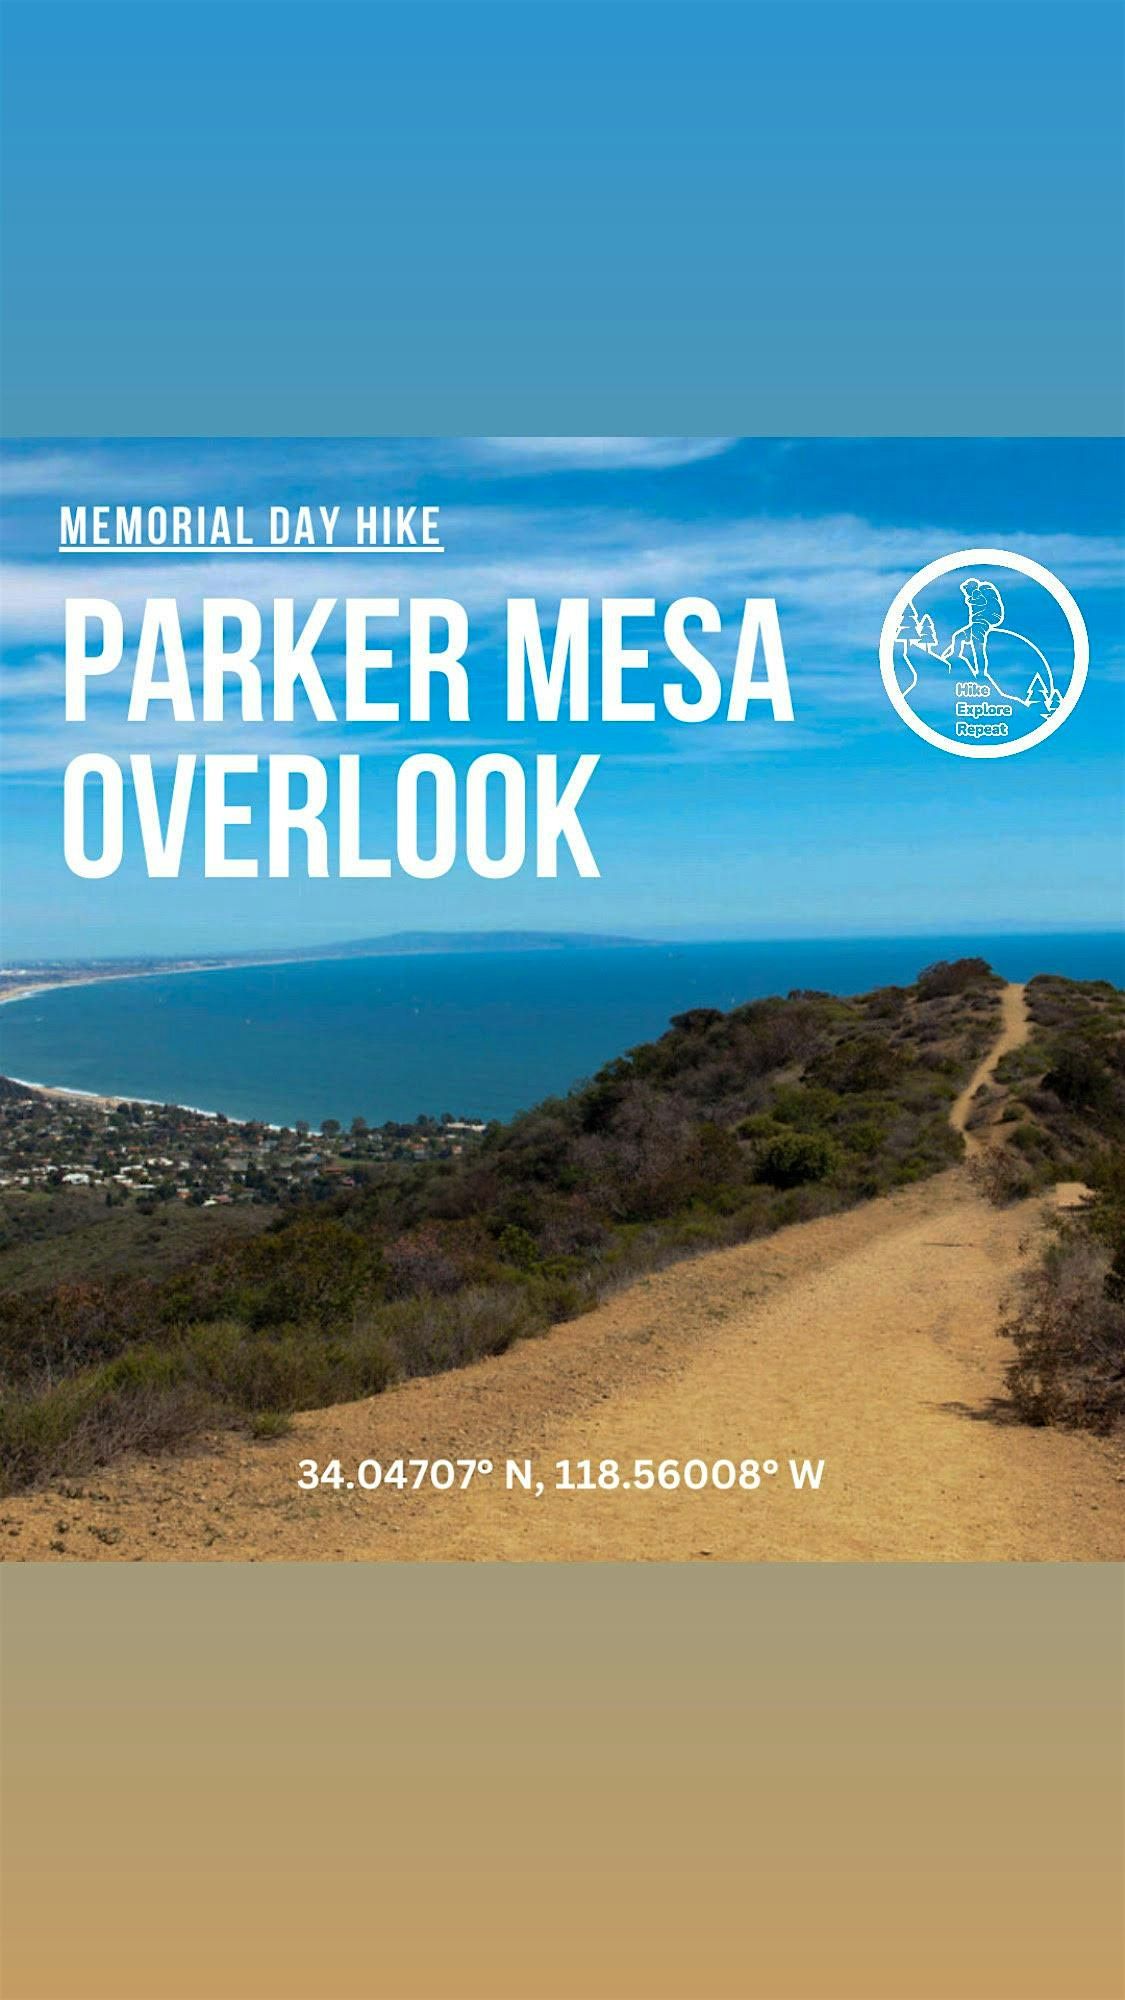 Memorial Day hike to Parker Mesa Overlook